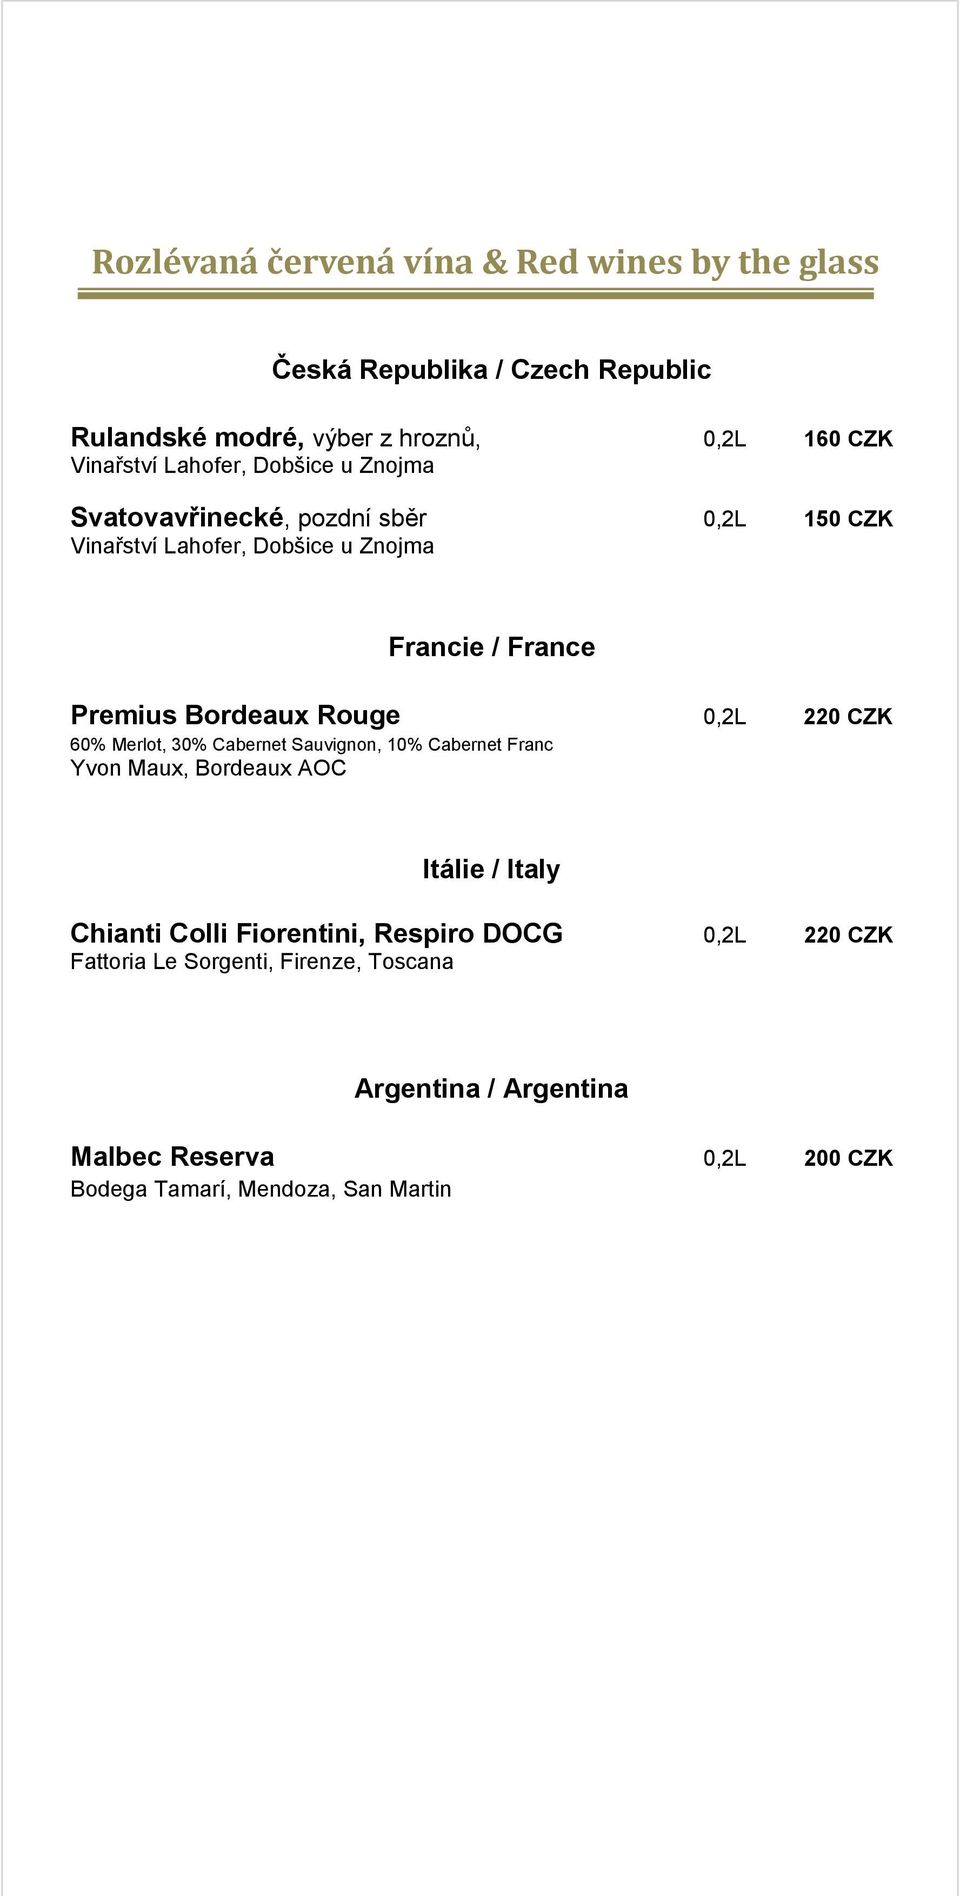 10% Cabernet Franc Yvon Maux, Bordeaux AOC Itálie / Italy Chianti Colli Fiorentini, Respiro DOCG 0,2L 220 CZK